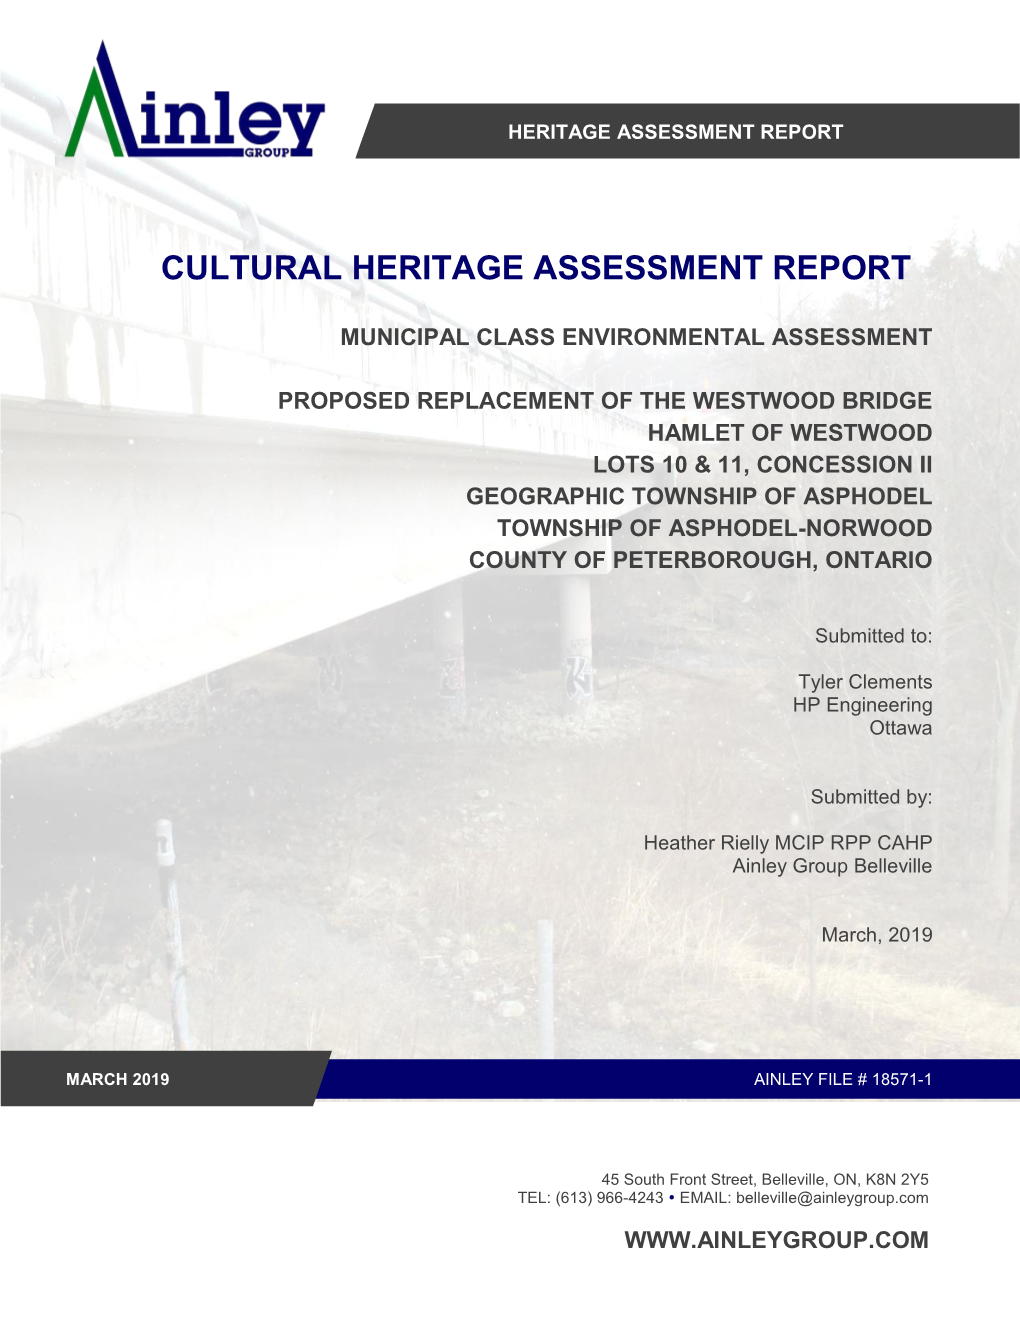 Cultural Heritage Assessment Report